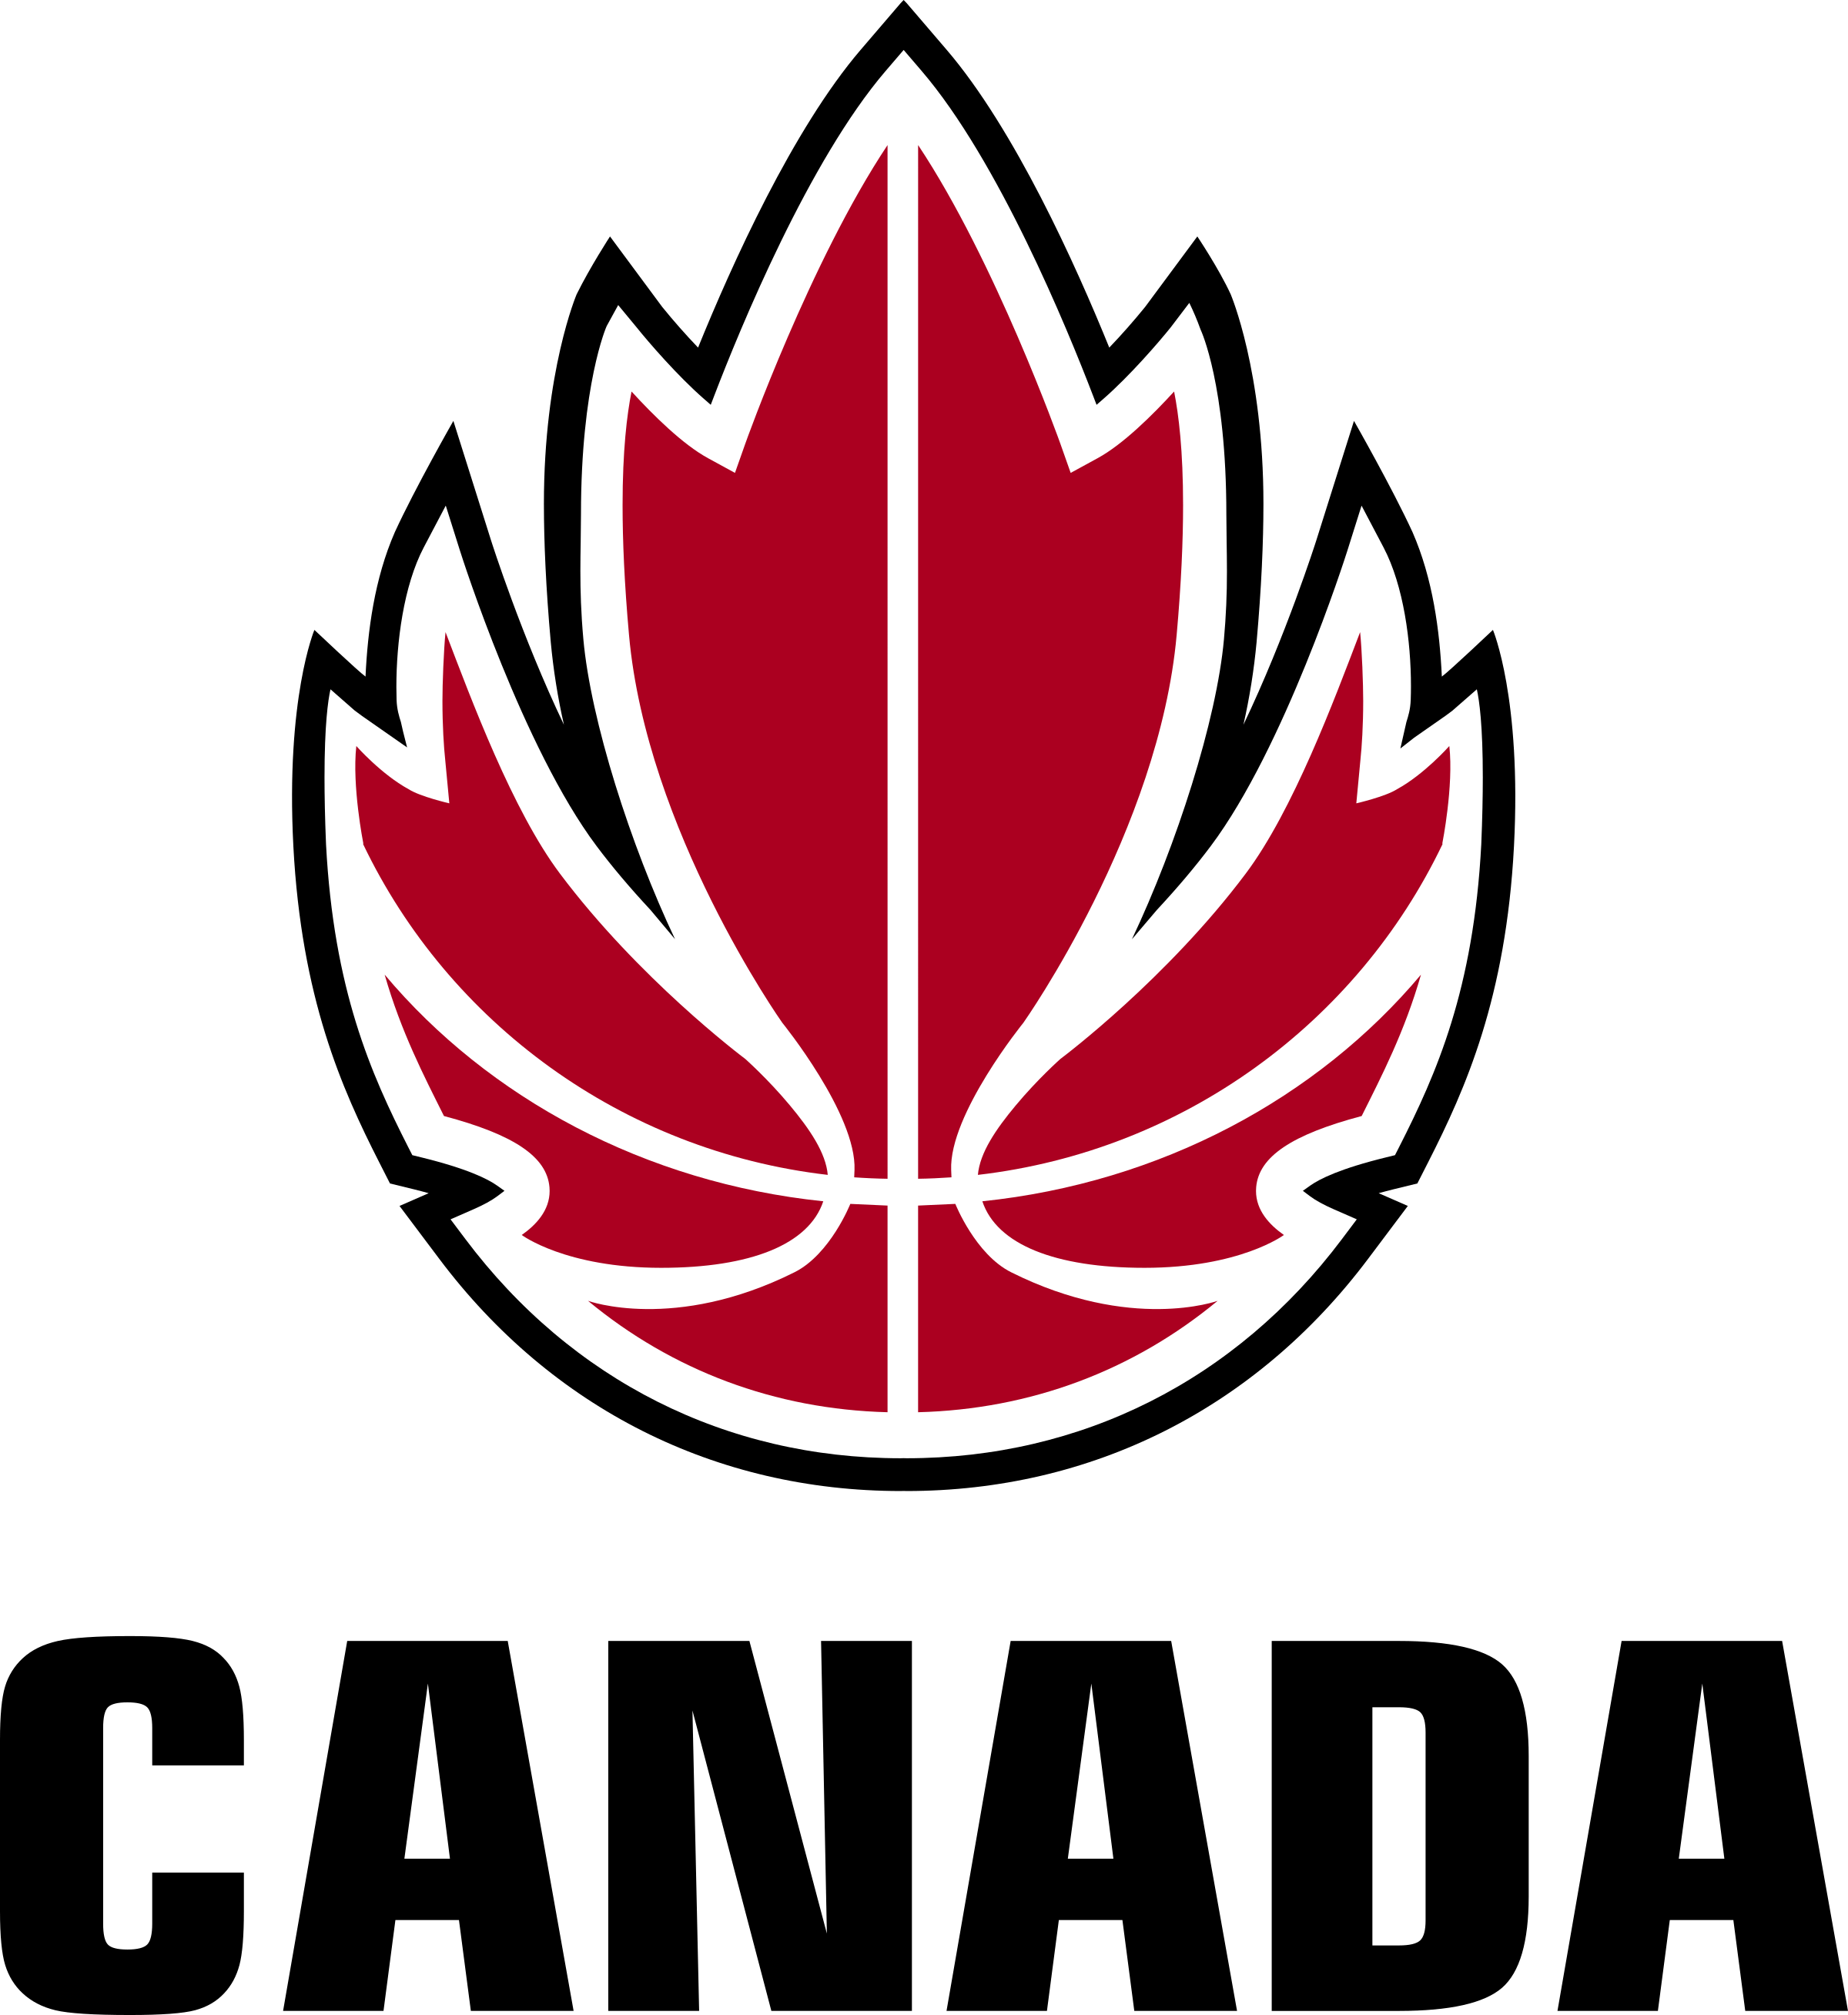 Transparent Basketball Logo - Canadian Basketball Logo PNG Transparent & SVG Vector - Freebie Supply